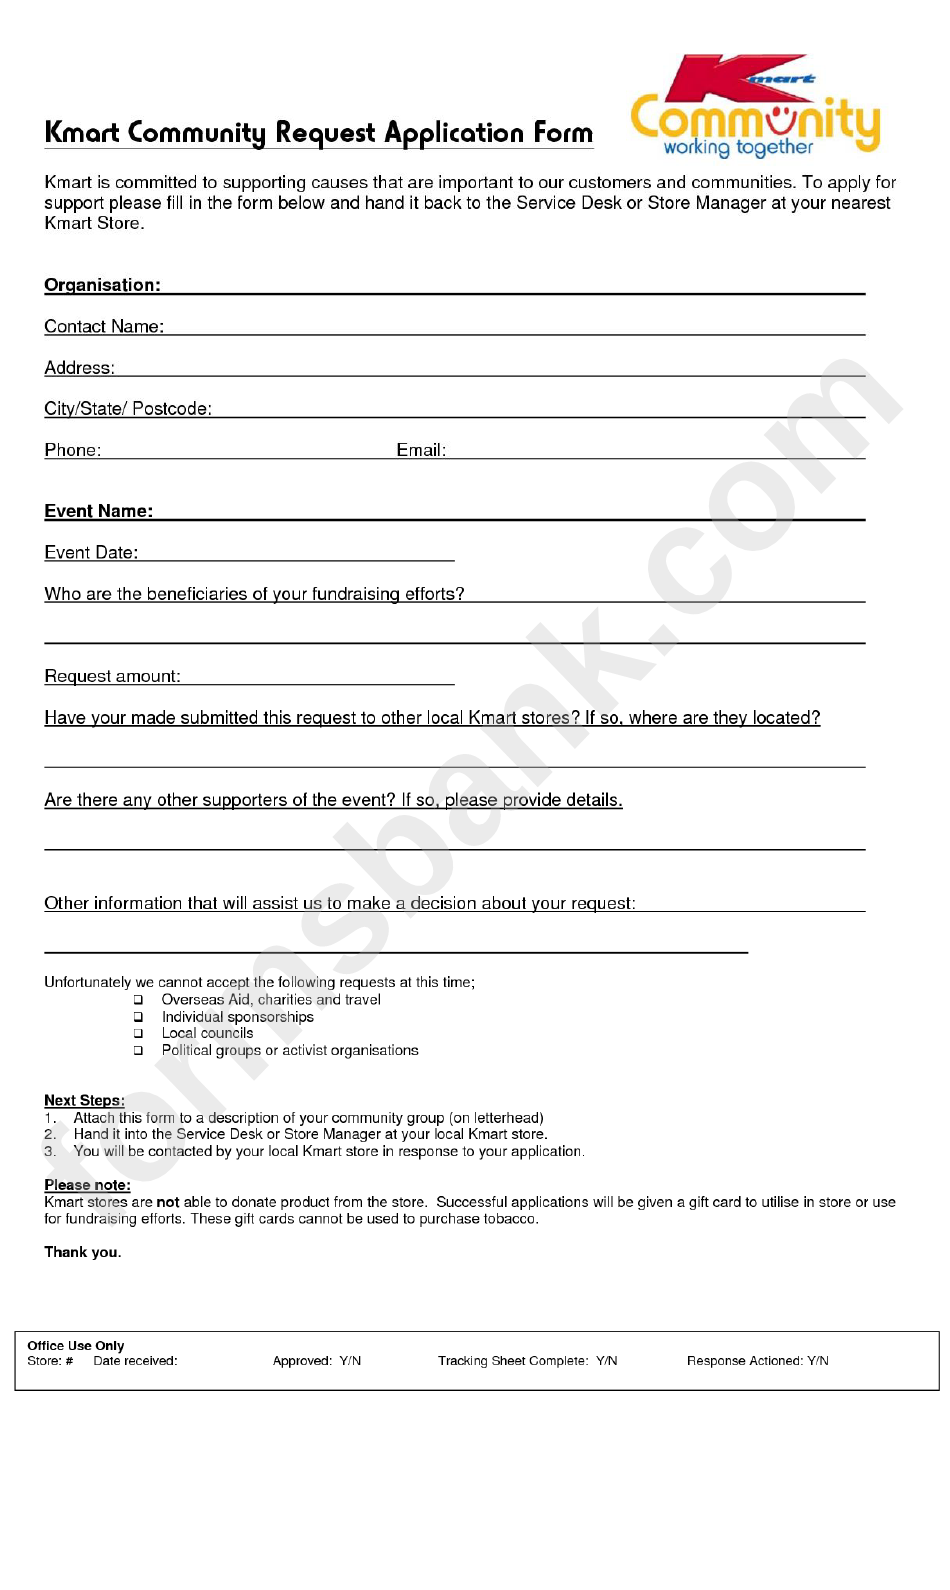 Kmart Community Request Application Form